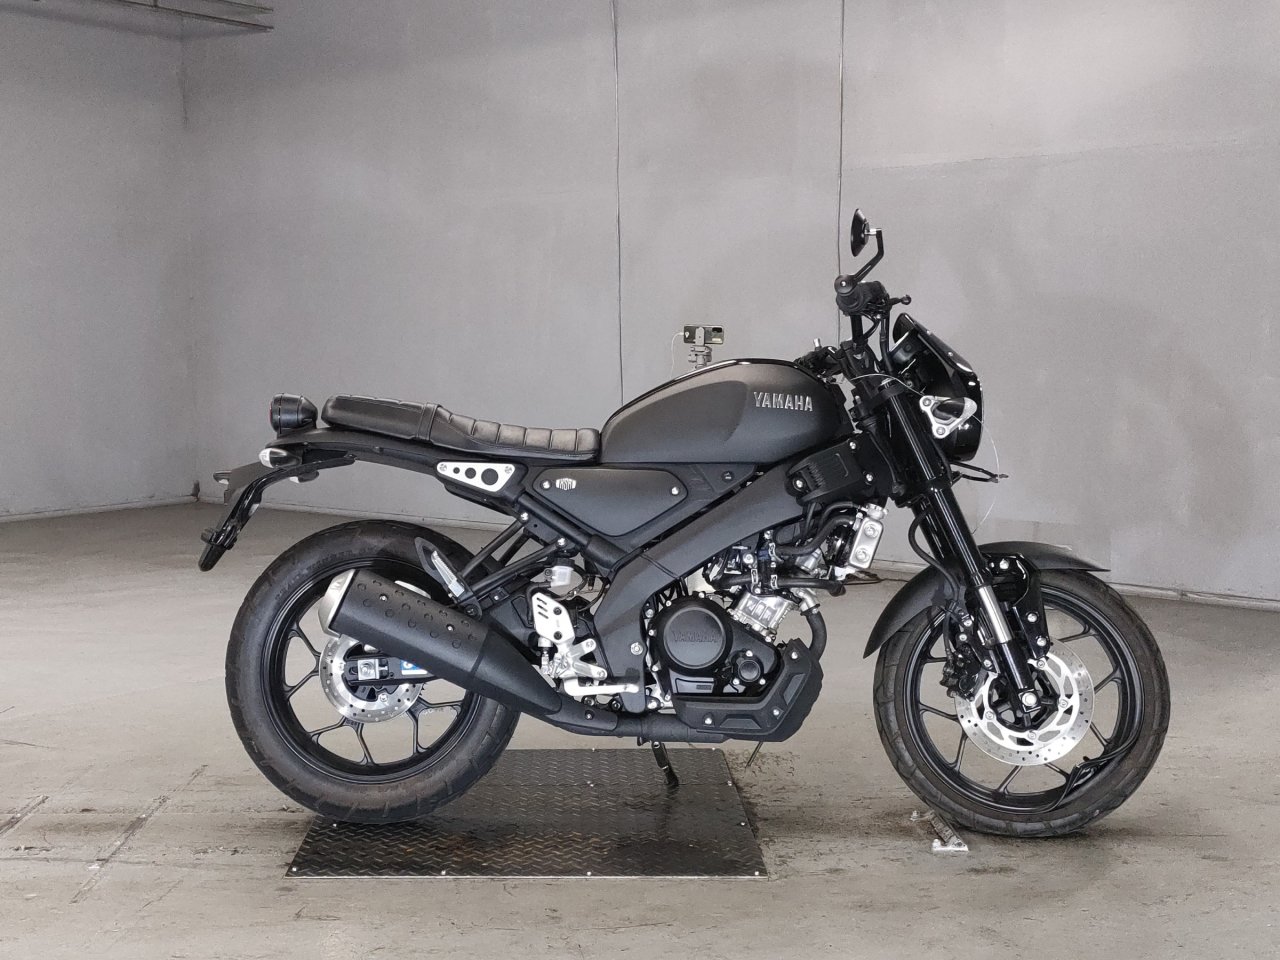 Yamaha XSR155 - Adamoto - Motorcycles from Japan